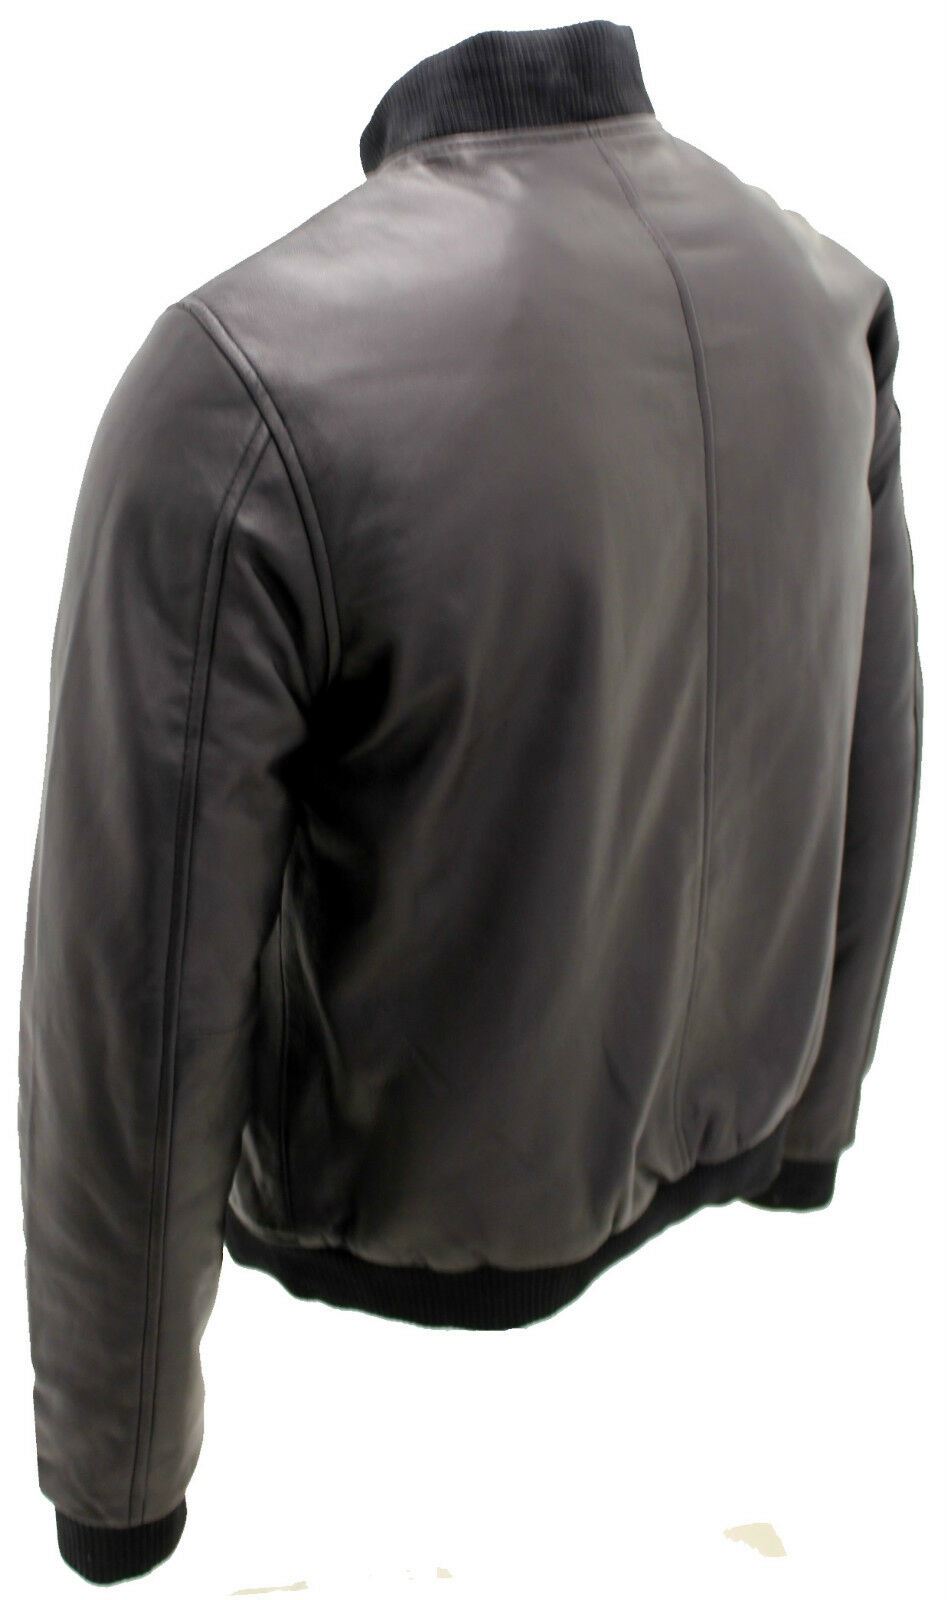 Mens Varsity Leather Bomber Jacket-Camelford